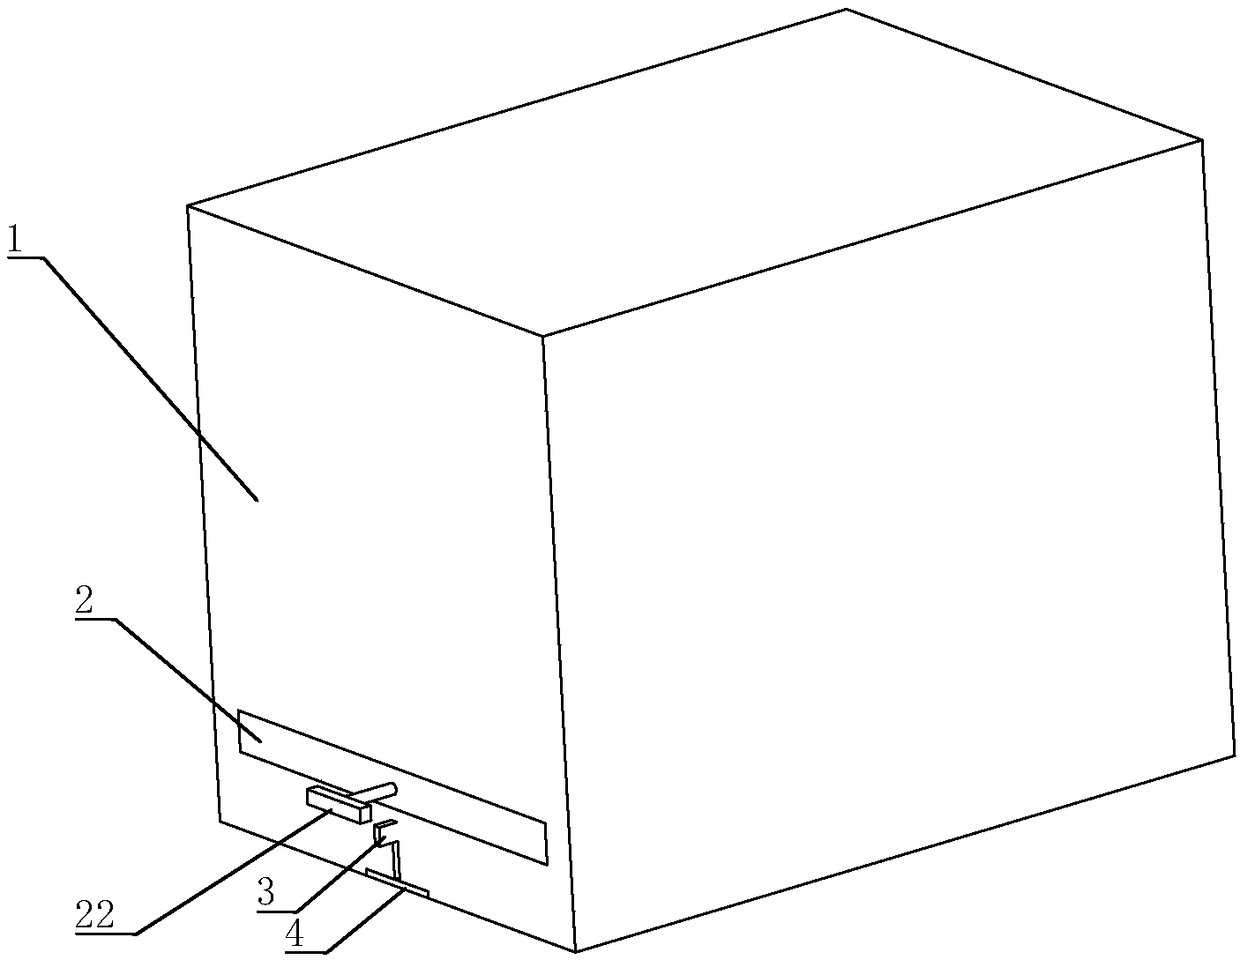 Distribution box capable of locking a panel